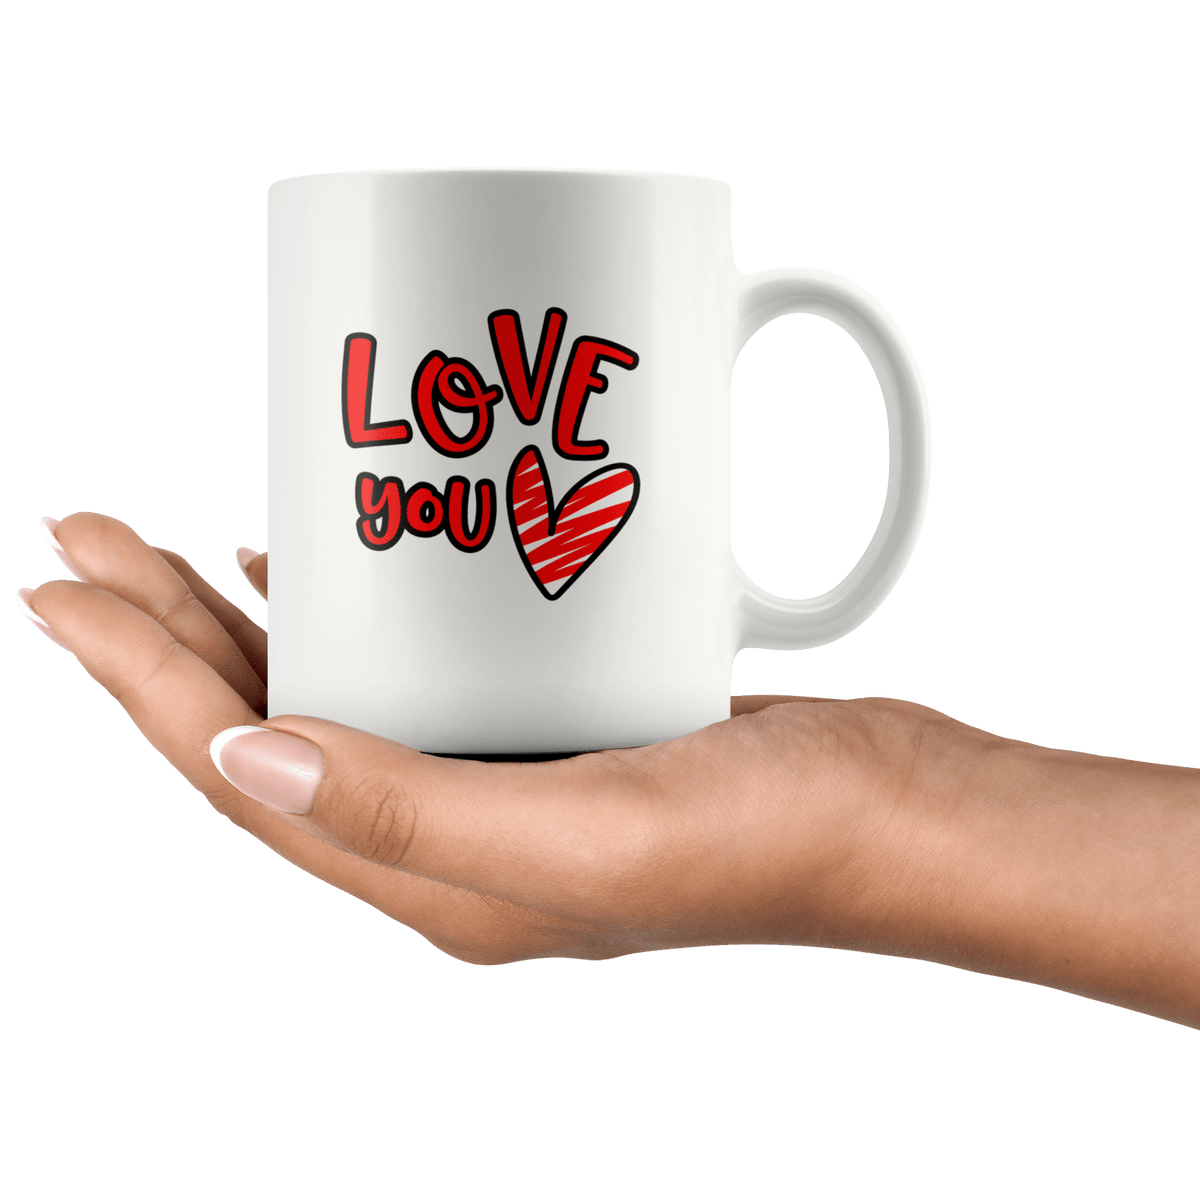 Love You Mug By Ted Pursuits Llc 